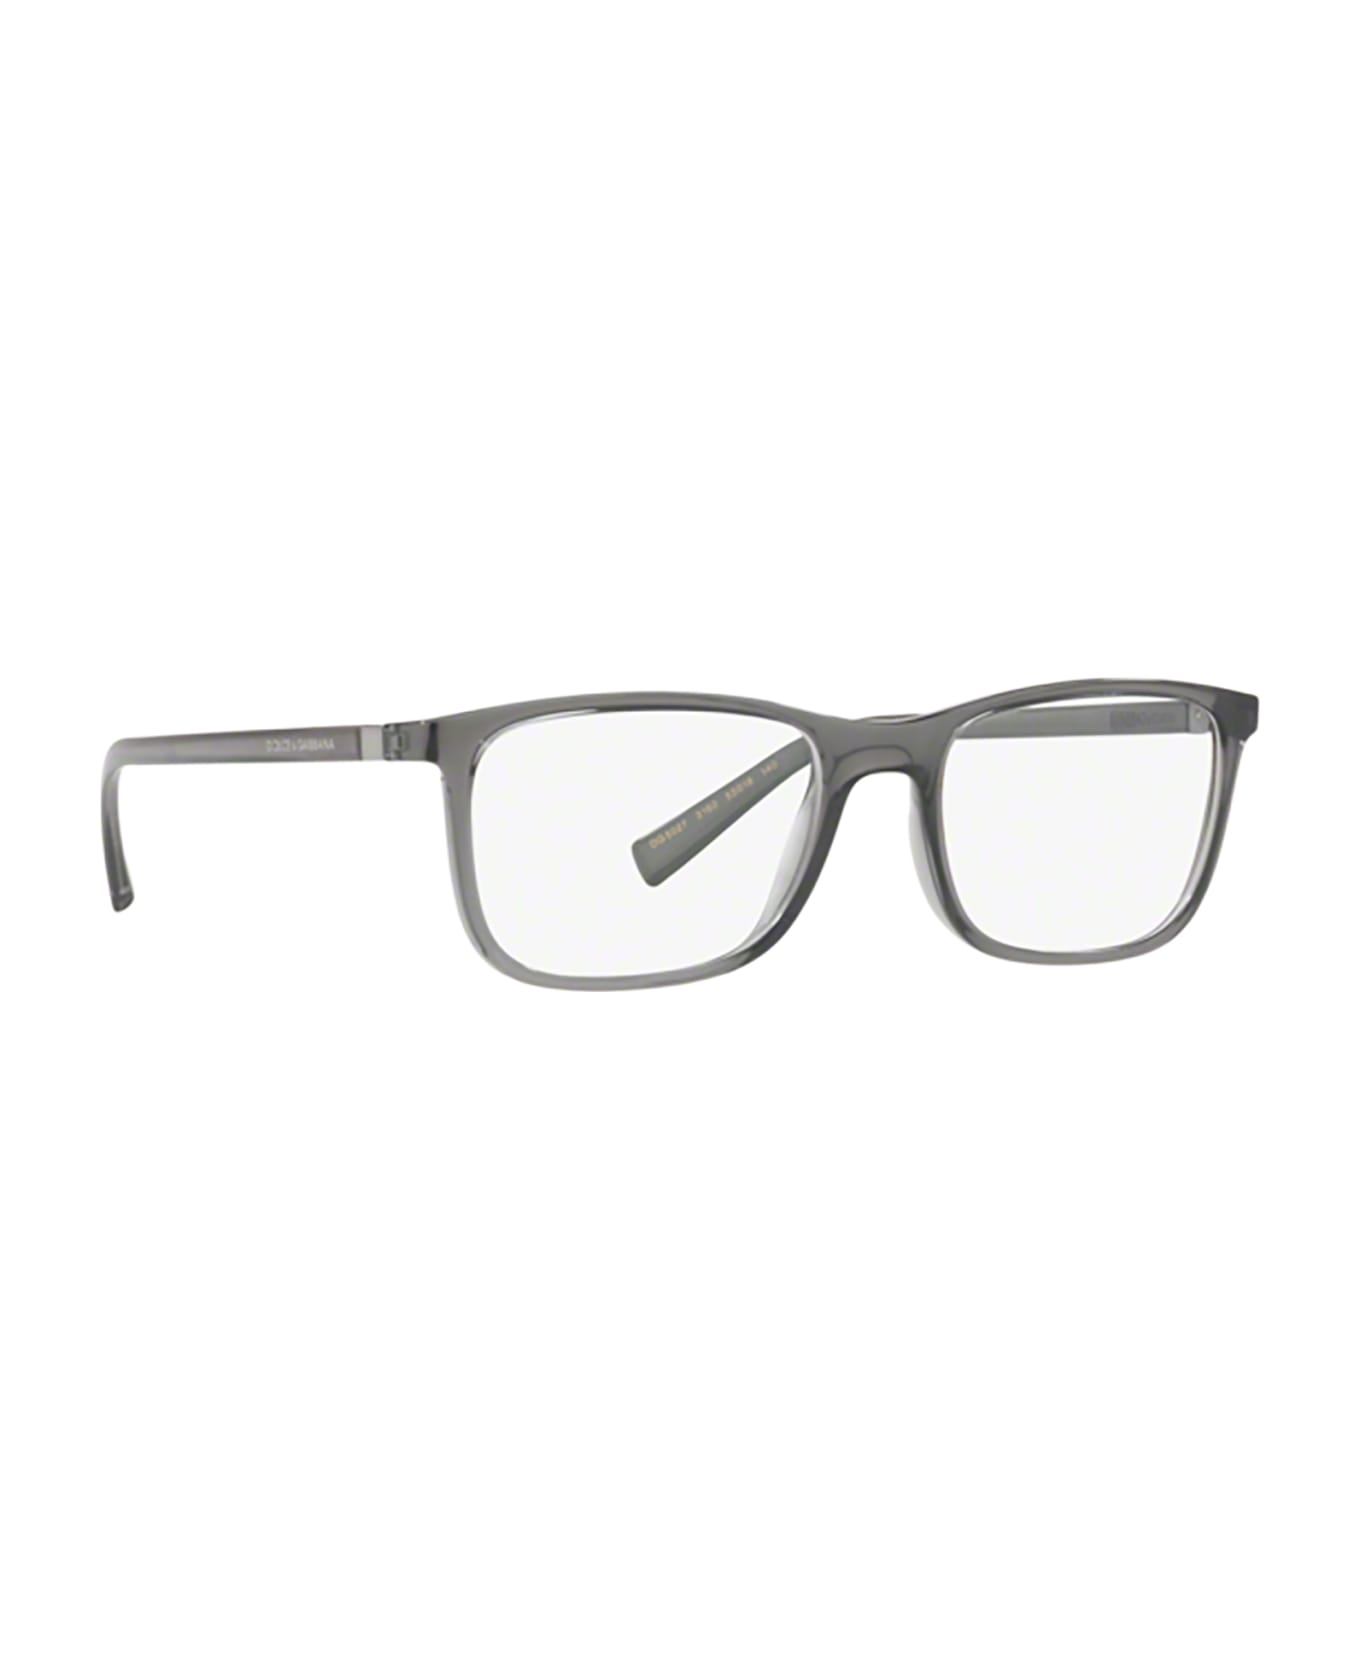 Dolce & Gabbana Eyewear Dg5027 Transparent Grey Glasses - TRANSPARENT GREY アイウェア